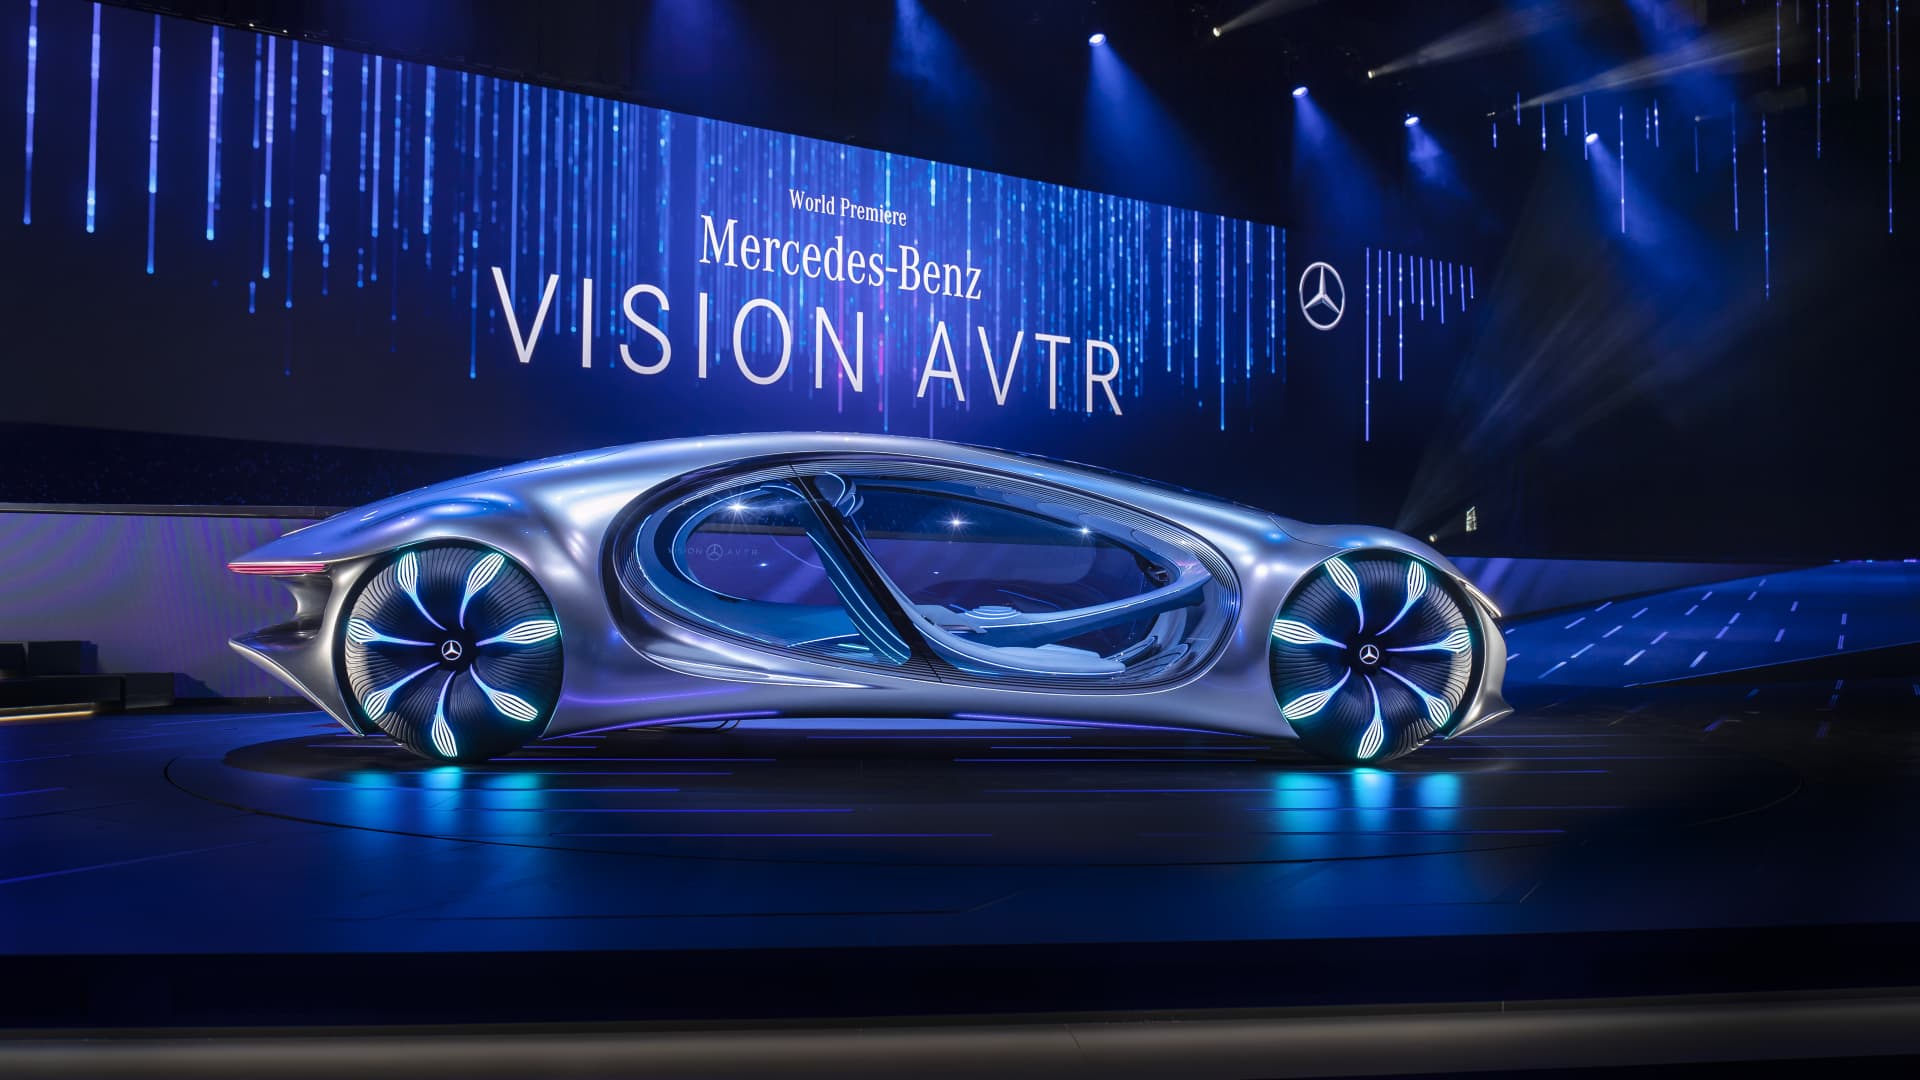 Photos: Mercedes Benz's Concept Car Inspired By 'Avatar'